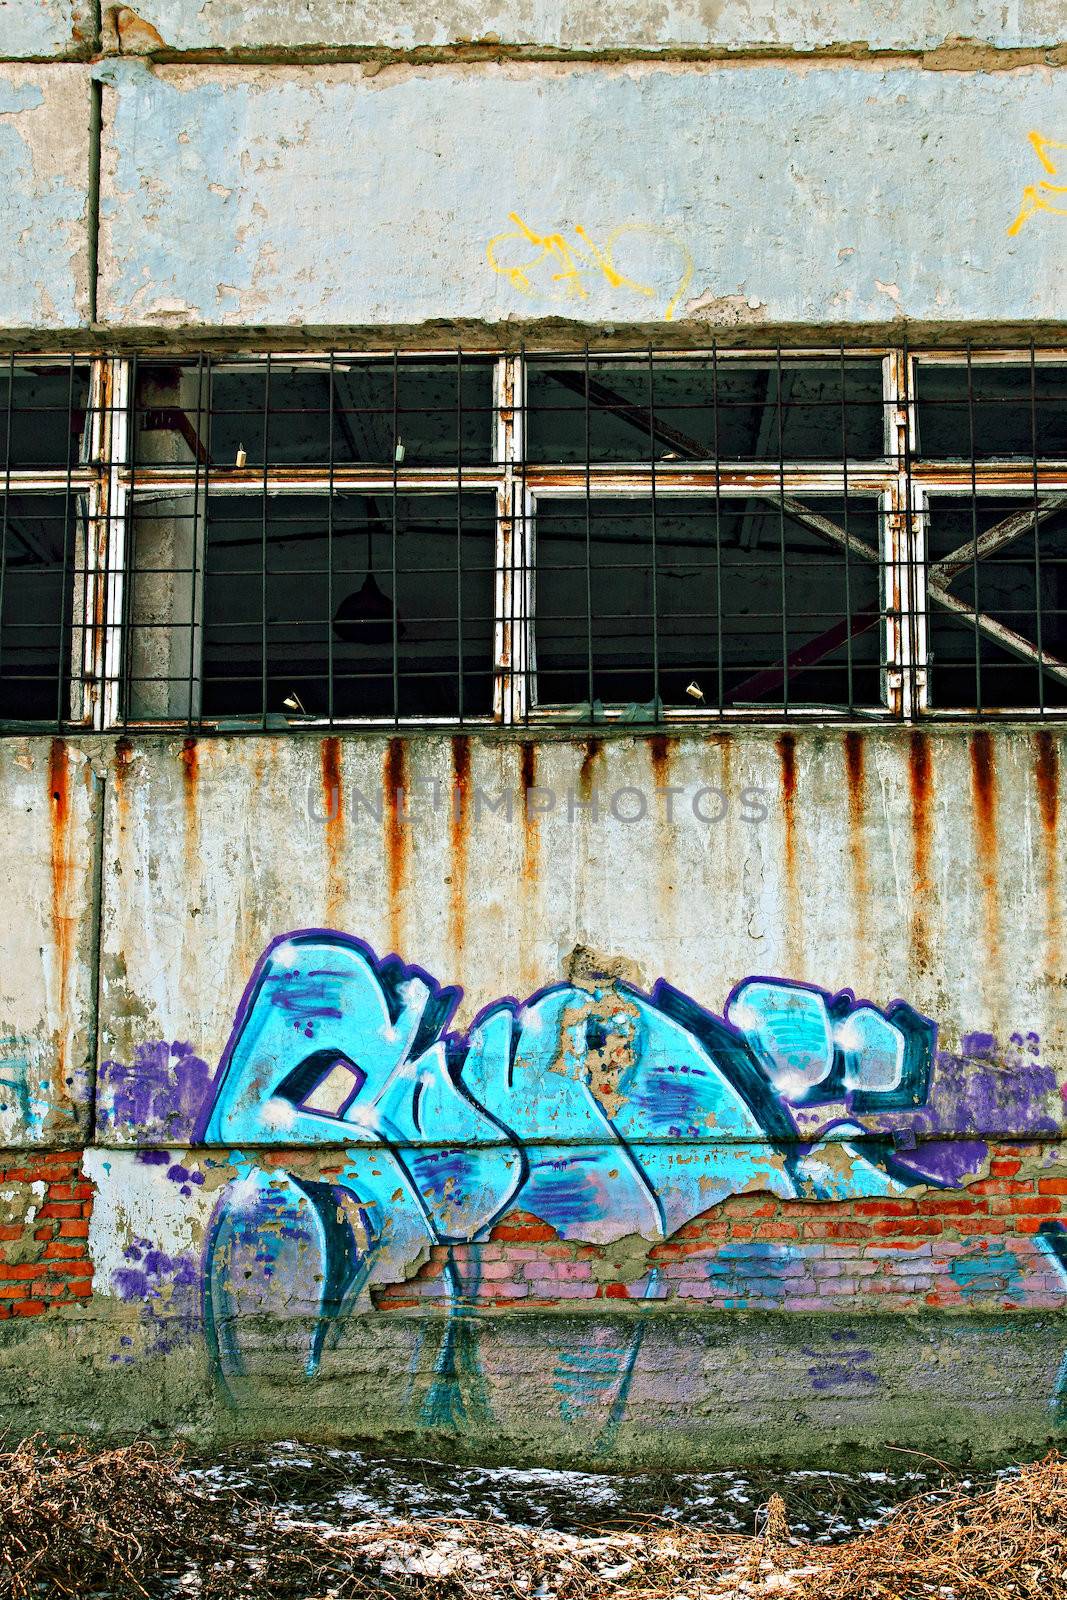 graffiti on old concrete wall